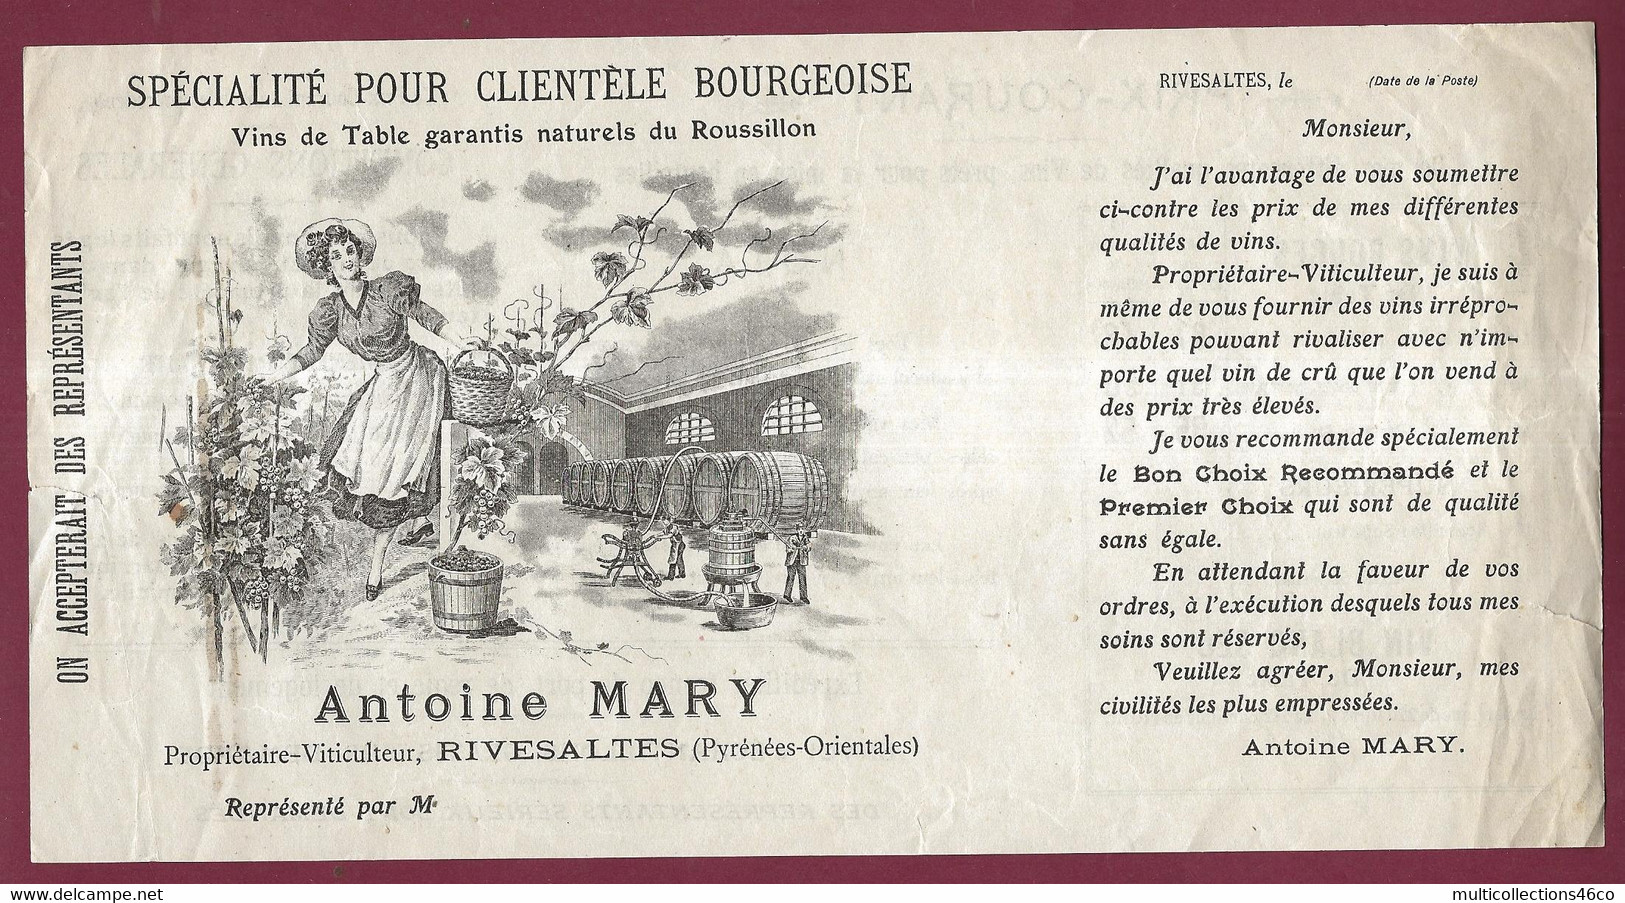 020421 - DOCUMENT COMMERCIAL Tarif Vin 66 RIVESALTES - ANTOINE MARY Viticulteur Illustration Cave Chai Vigne - Rivesaltes